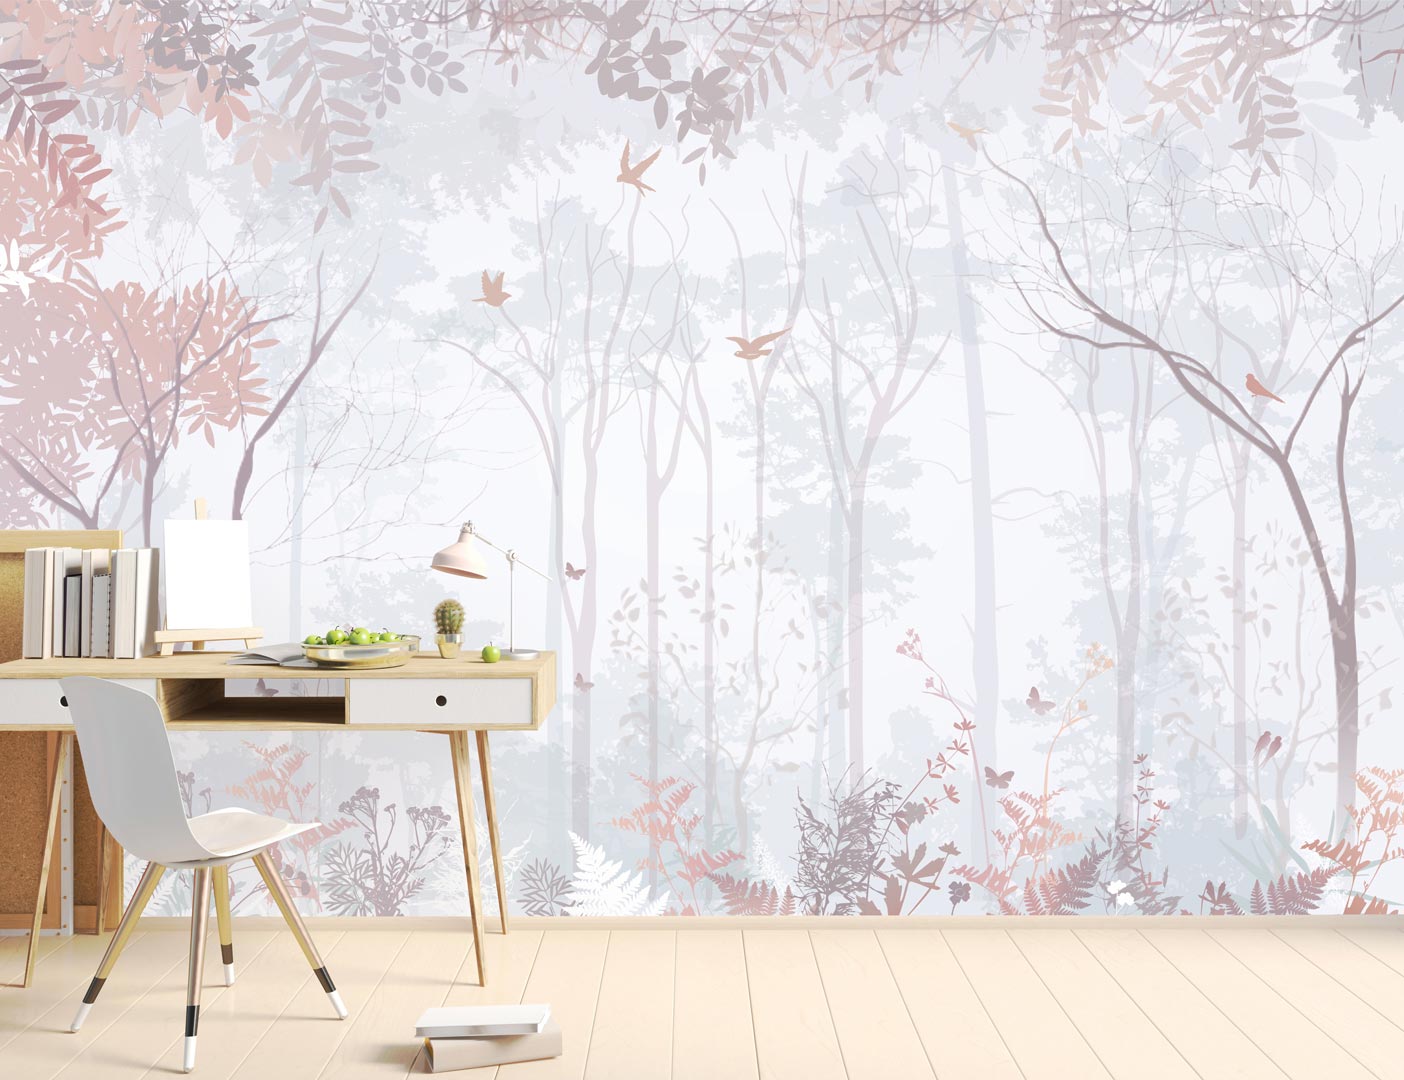 Pastel wallpaper in beige tones, enchanted forest with ferns, birds and butterflies - Dekoori image 2